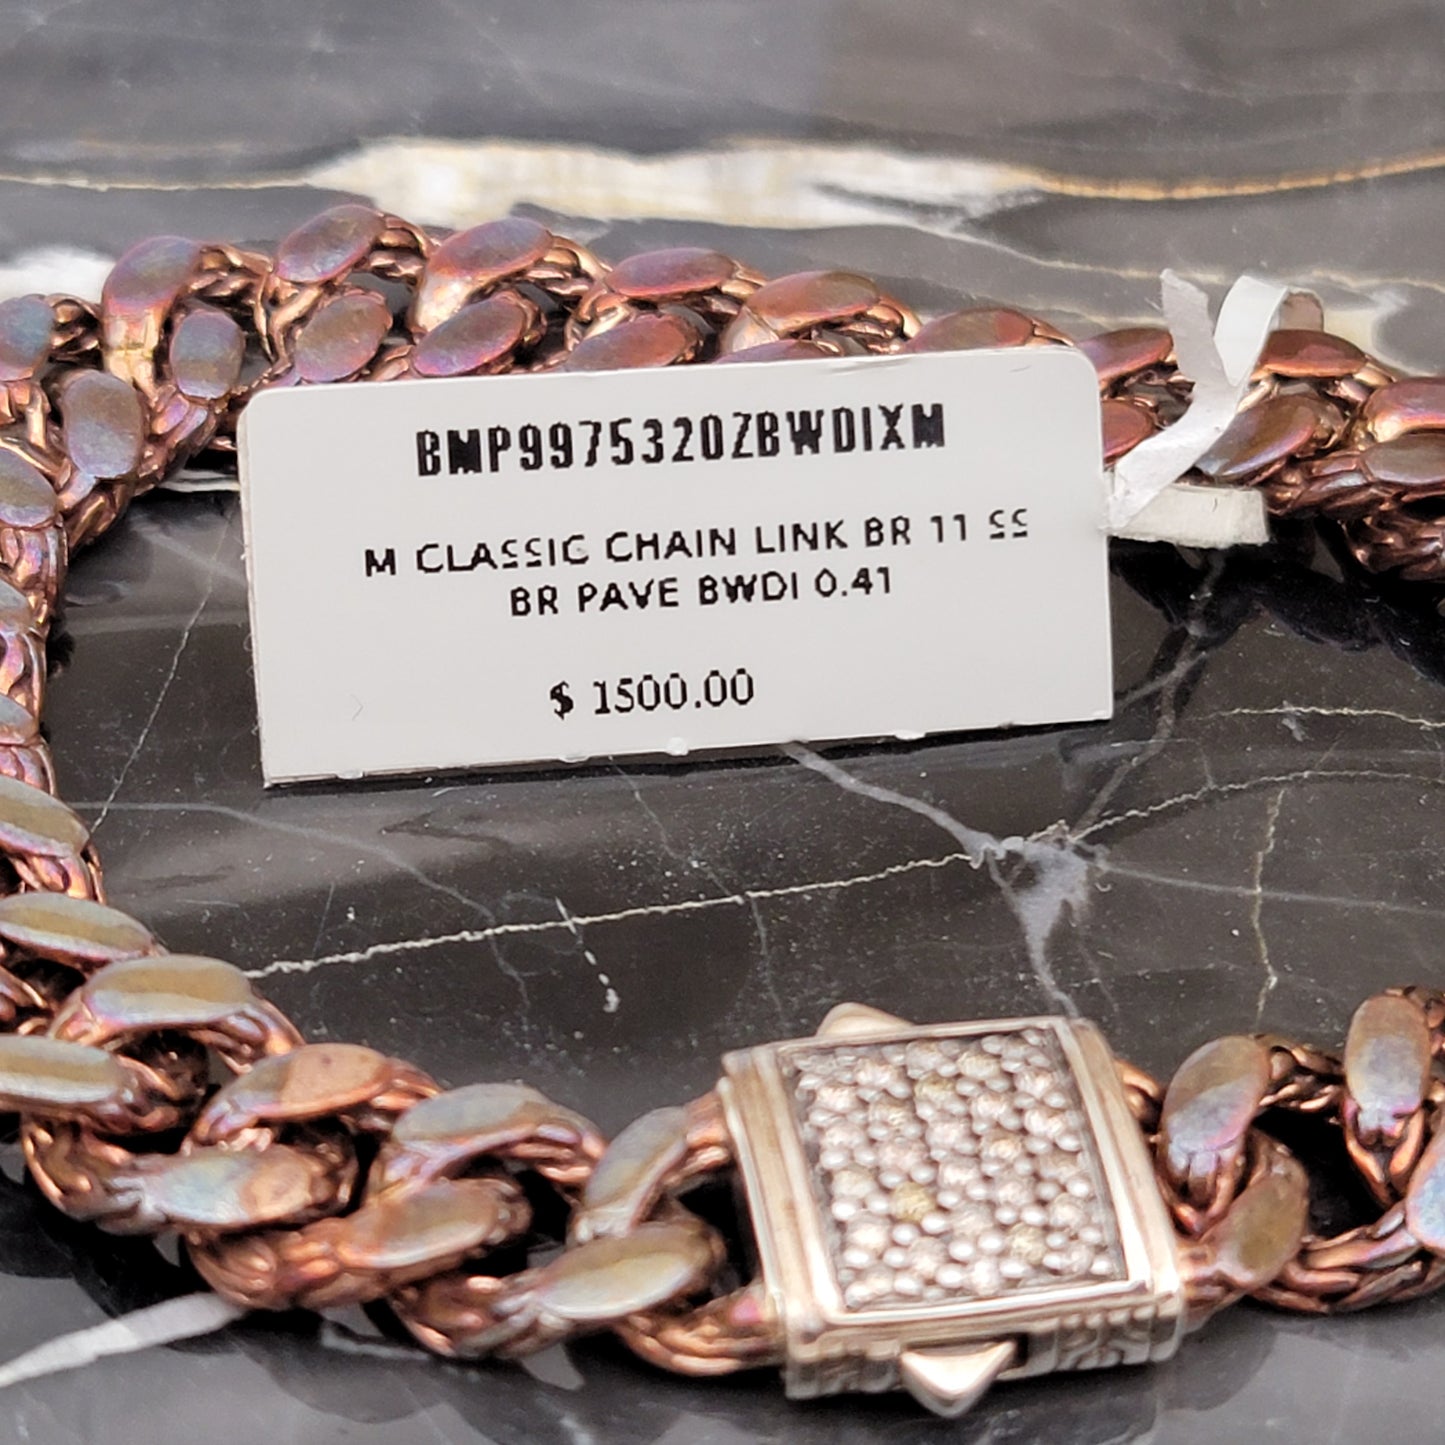 John Hardy Men's Diamond, Silver, and Bronze Links Bracelet - New with Tags